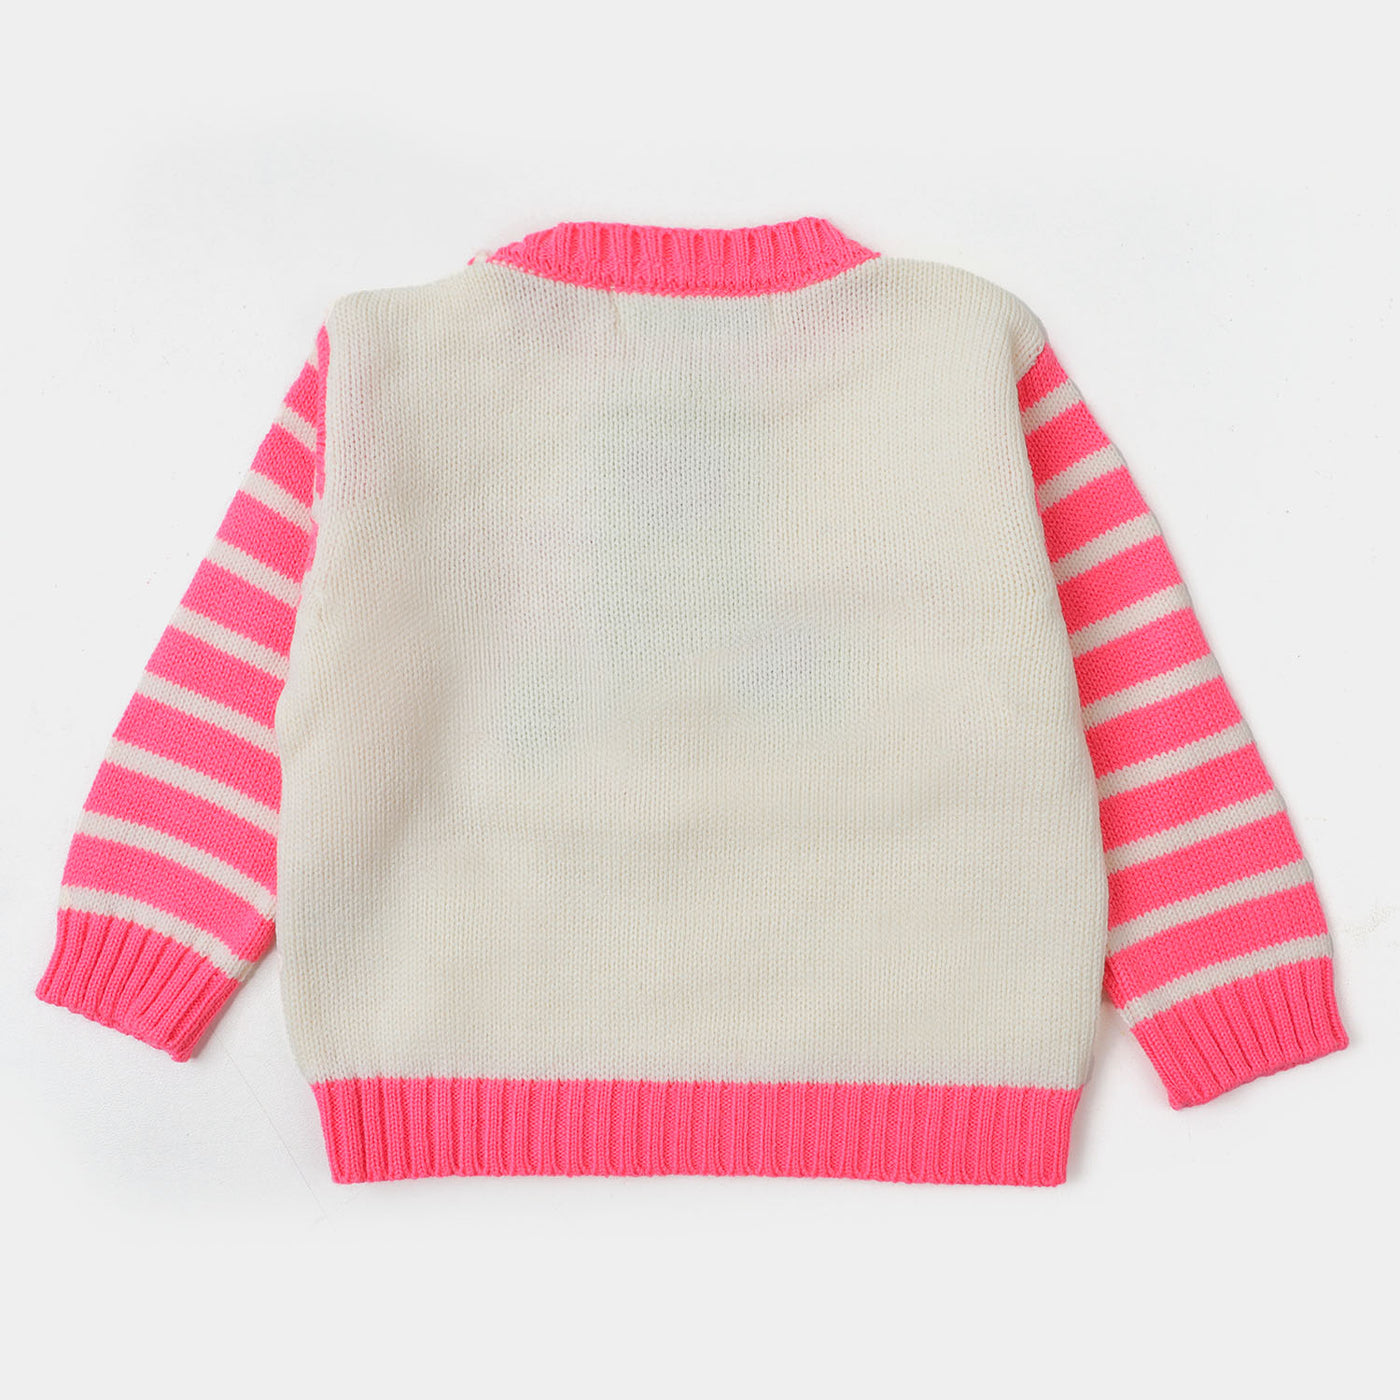 infant Girls Sweater BP20-22 - Pink/White